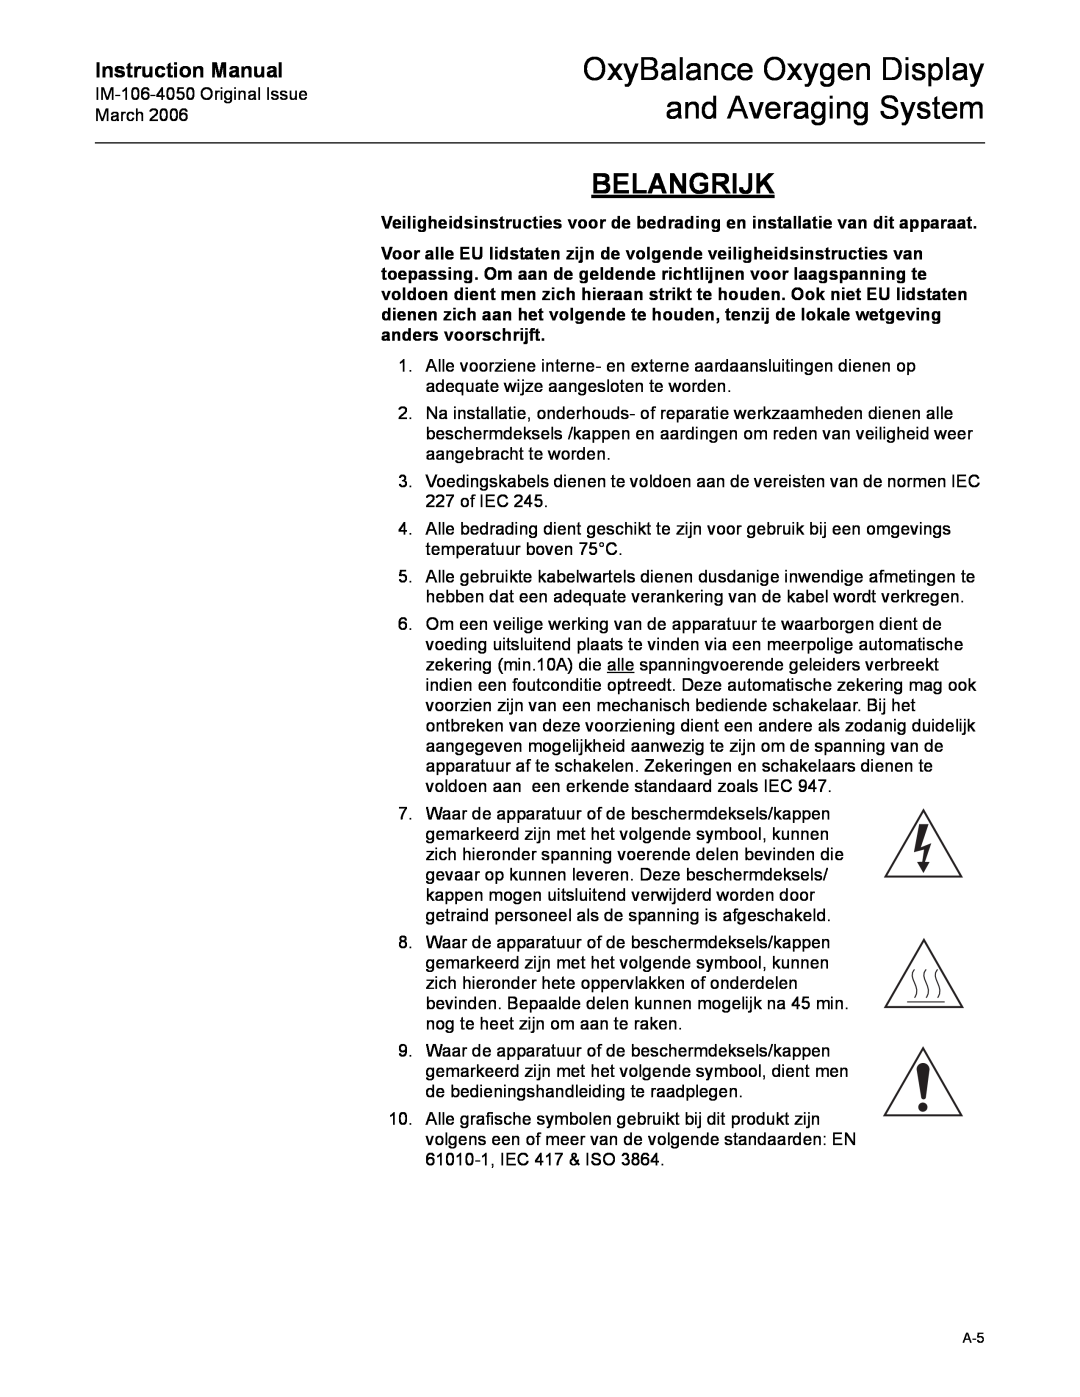 Emerson IM-106-4050 instruction manual OxyBalance Oxygen Display and Averaging System, Belangrijk, Instruction Manual 